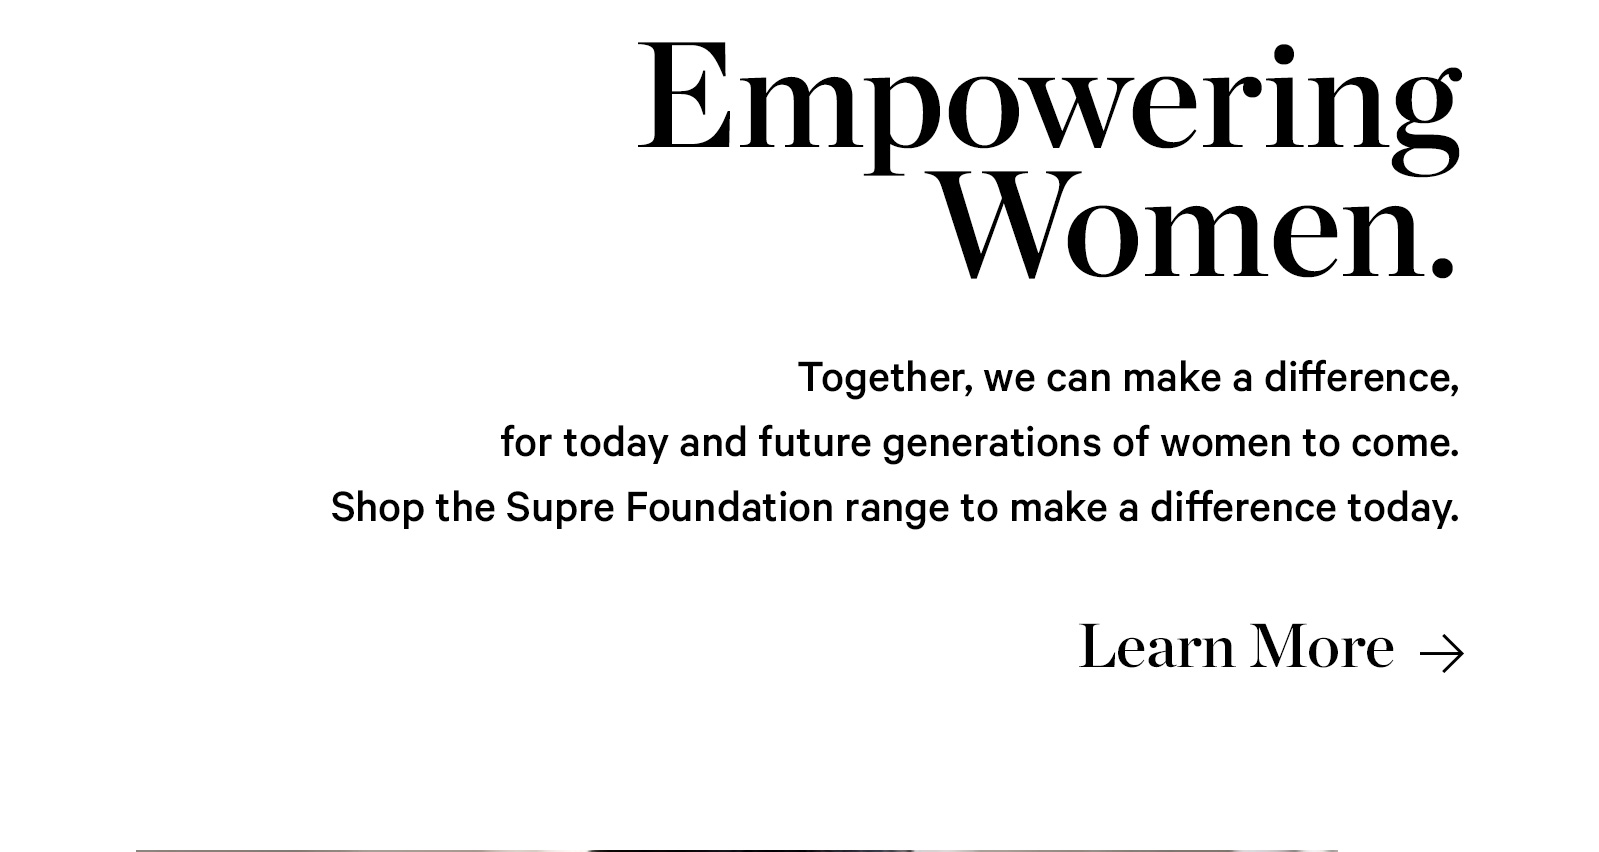 A Better Tomorrow - Empowering Women